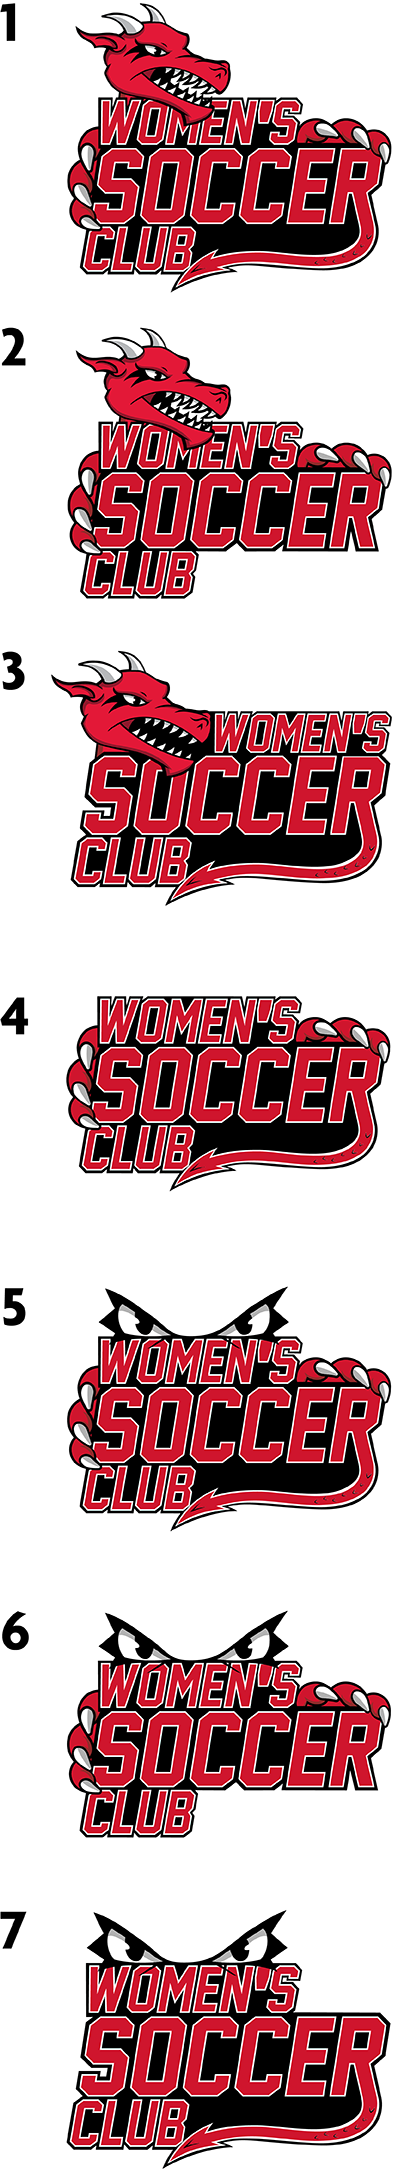 Sport club logo examples 1 through 7